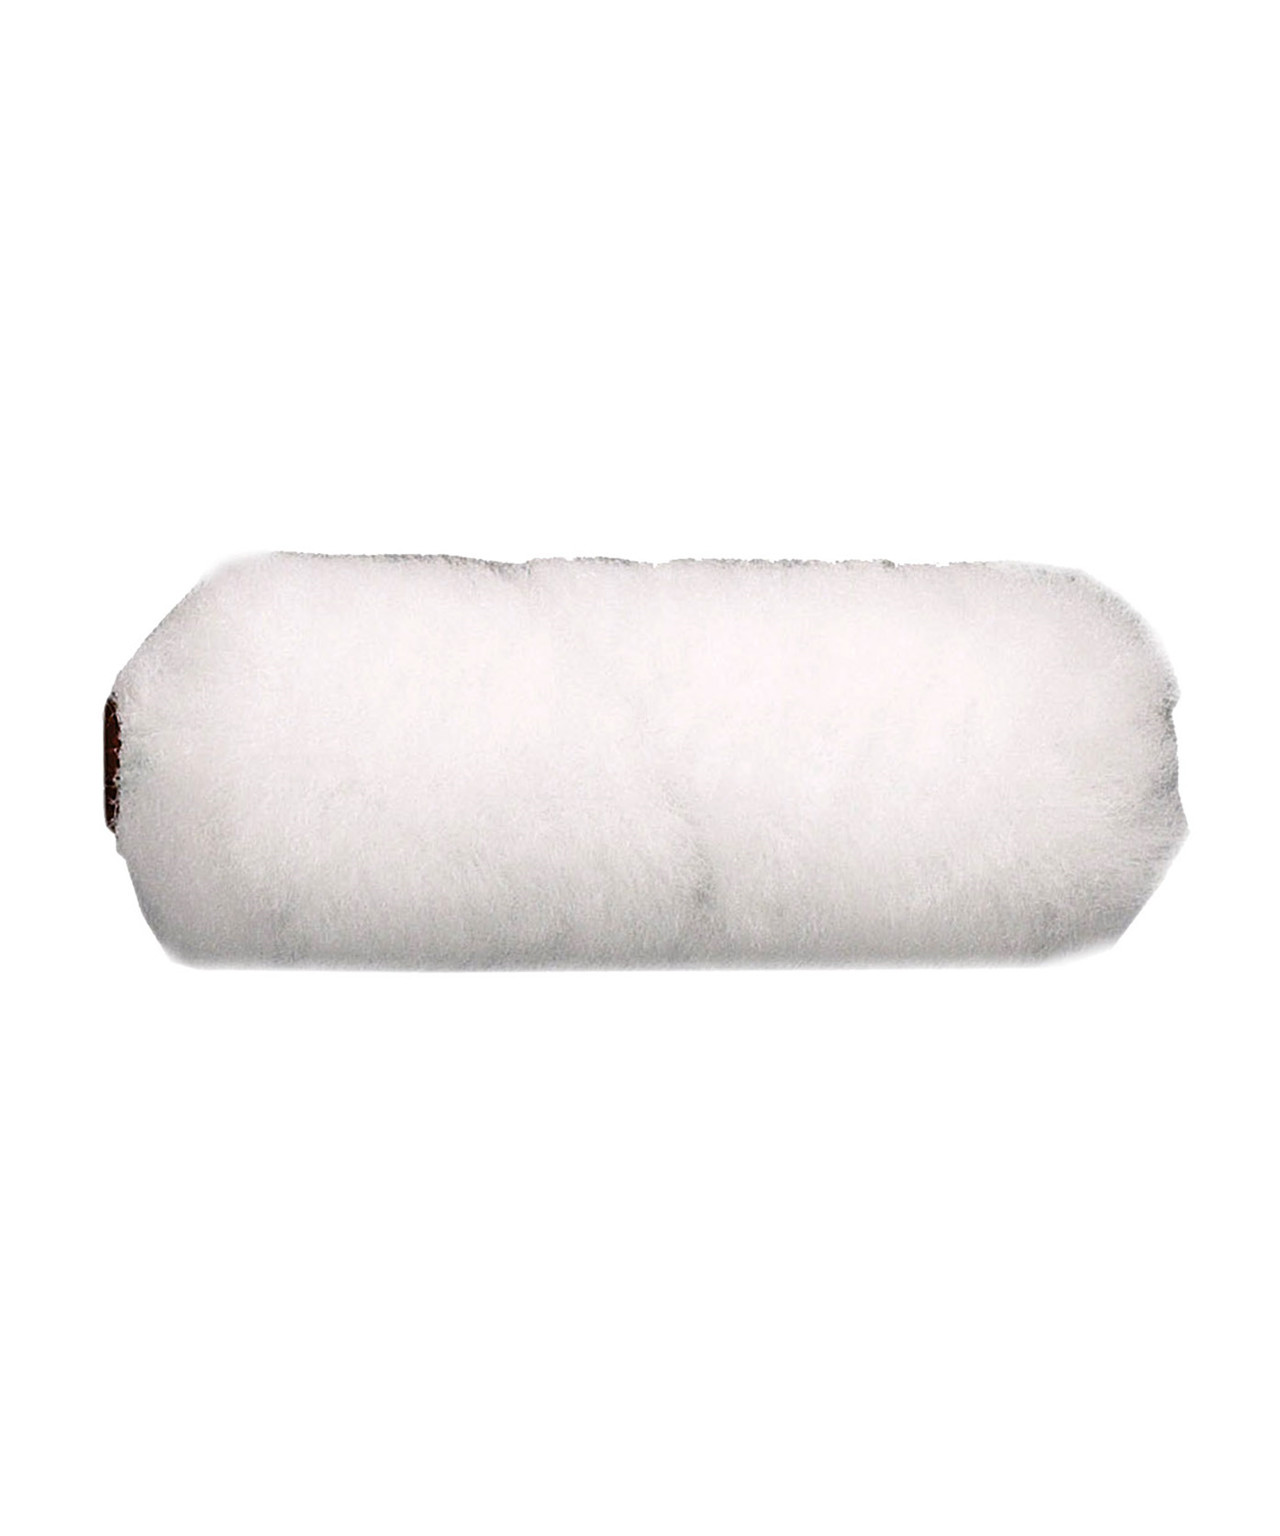 Se Malerrulle 100 mm, hvid - Vikan Minimester Refill Stick, hos Specialbutikken